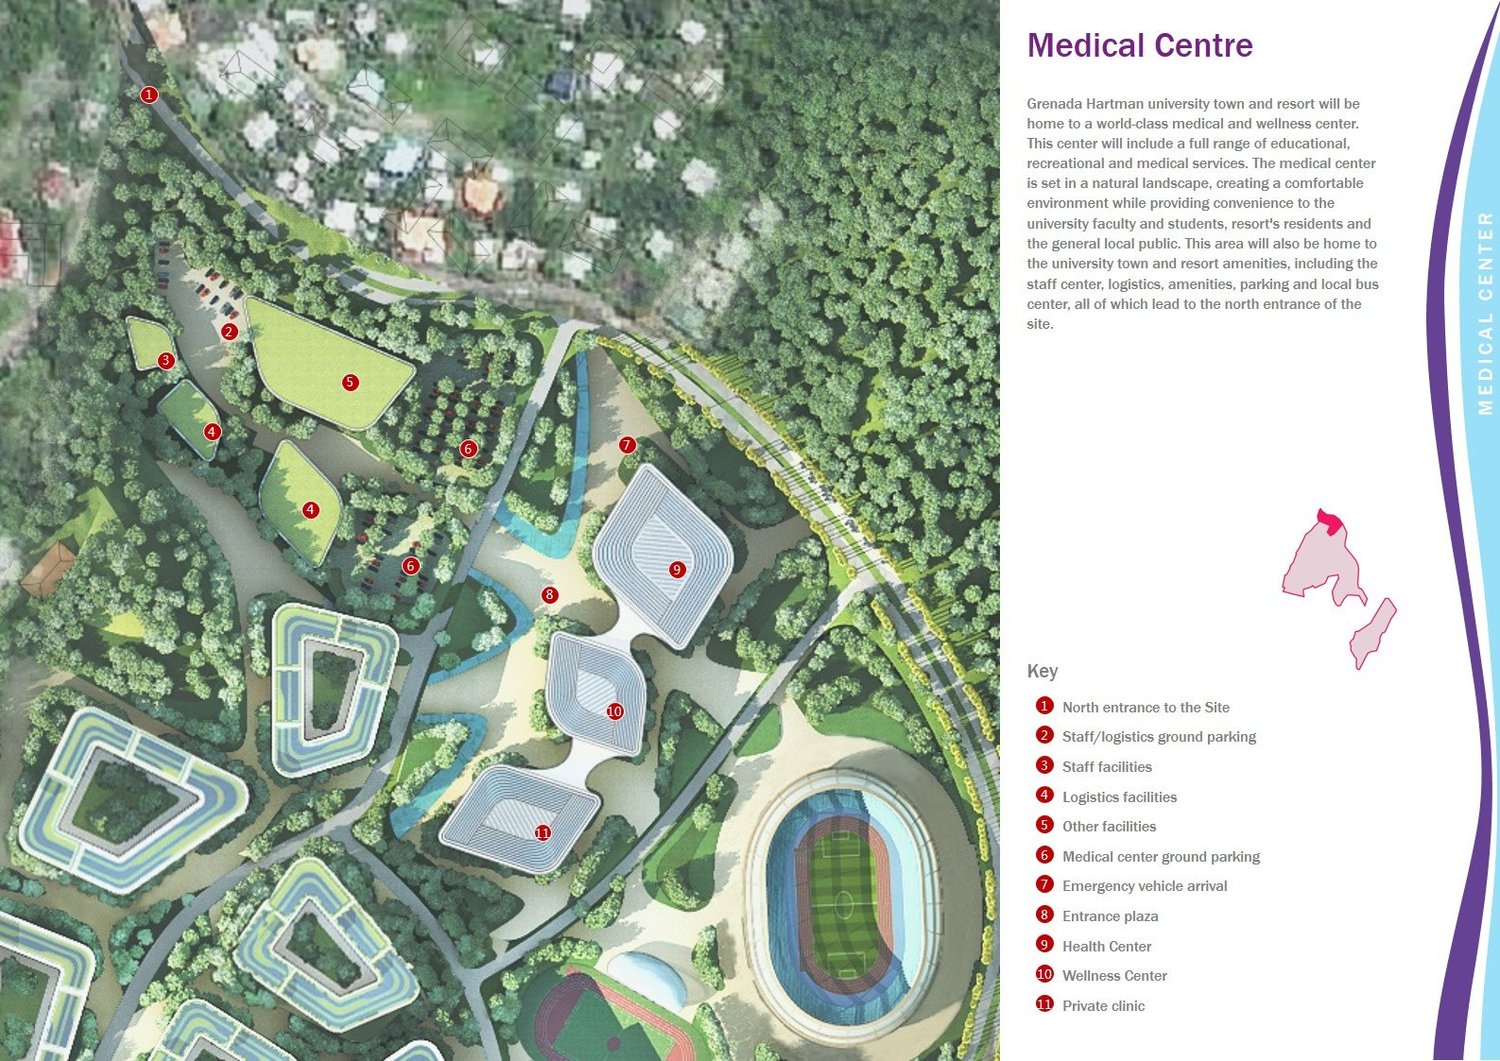 Medical centre plan | BAI Design International